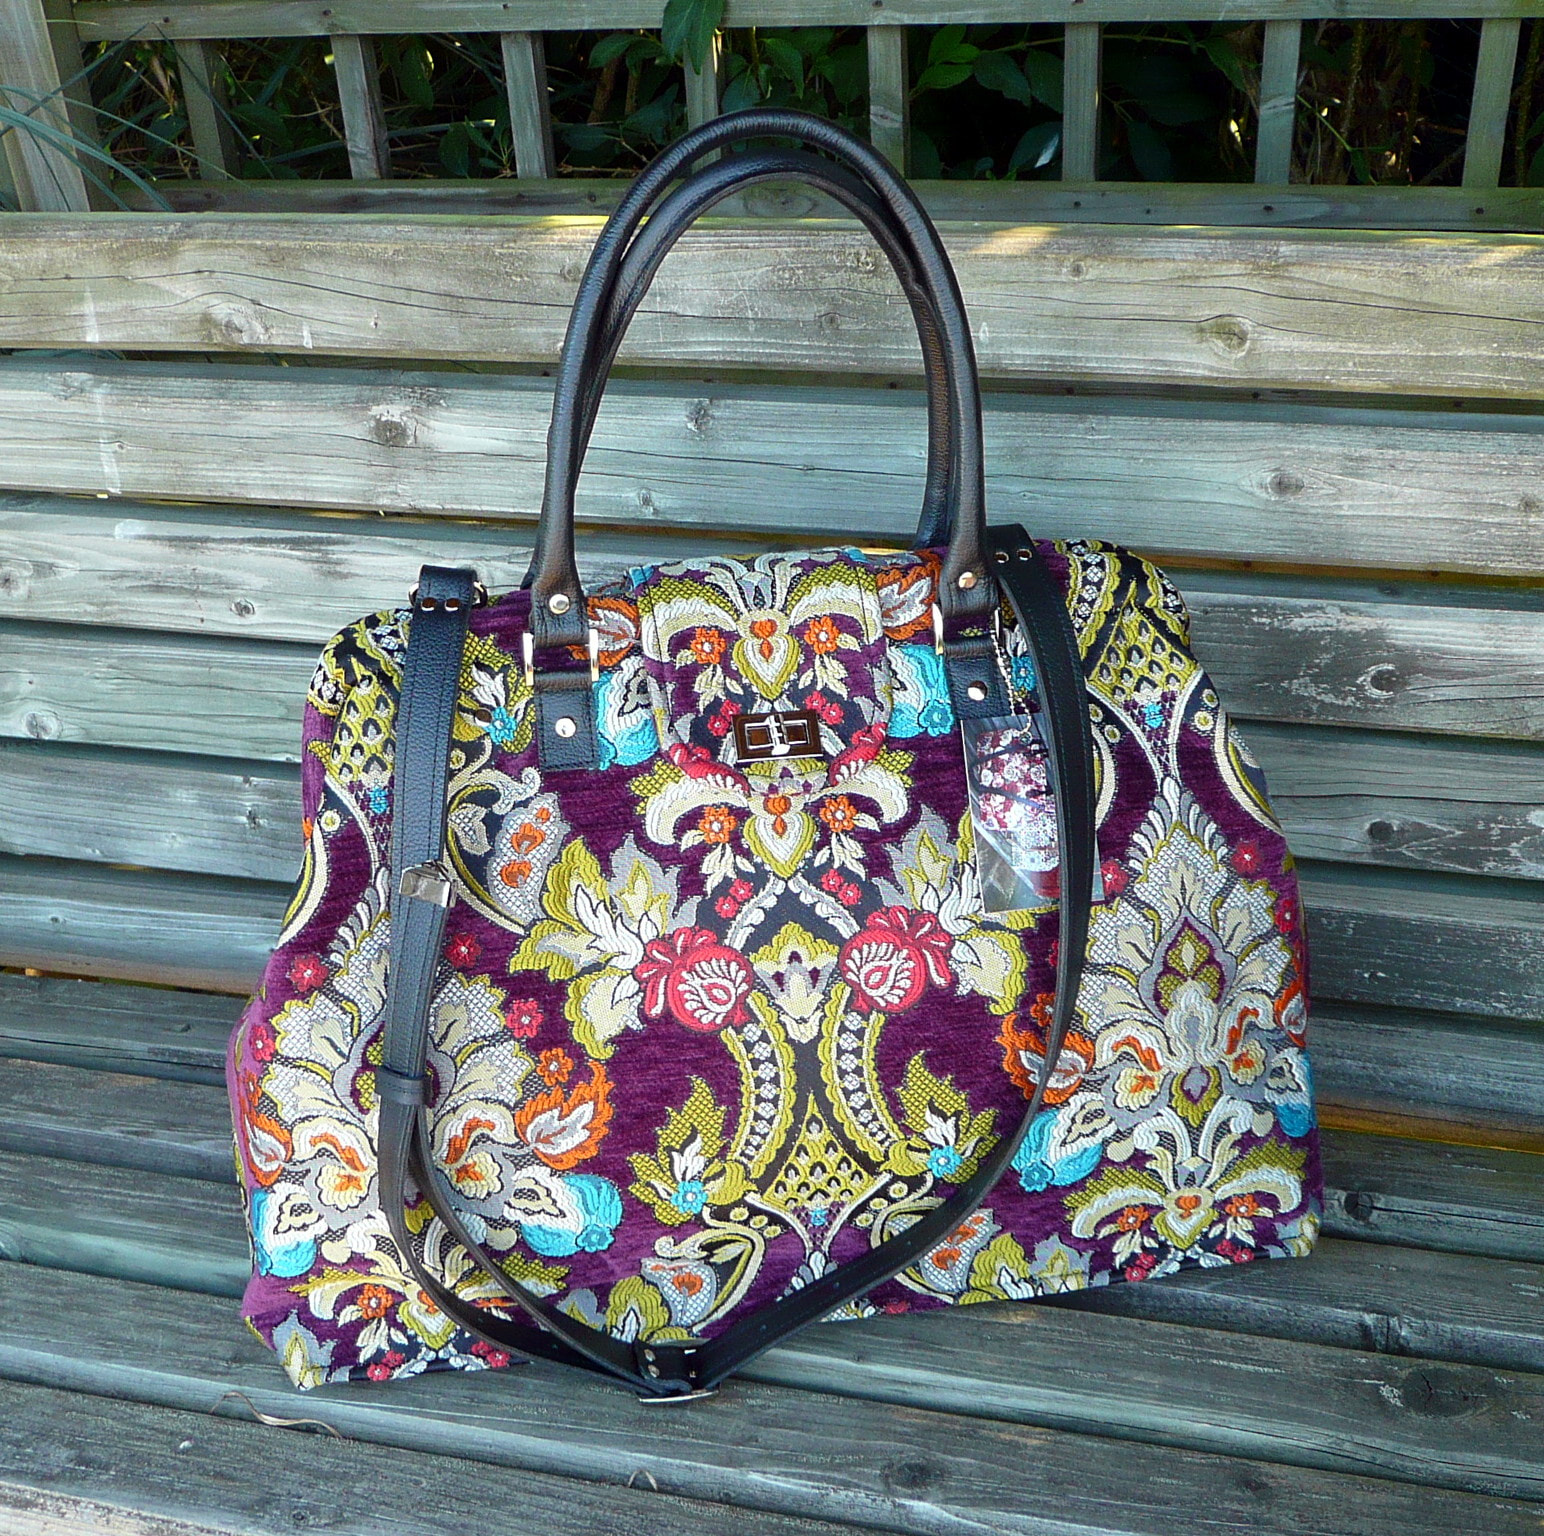 Weekender bag, Mary Poppins style carpet bag, travel bag